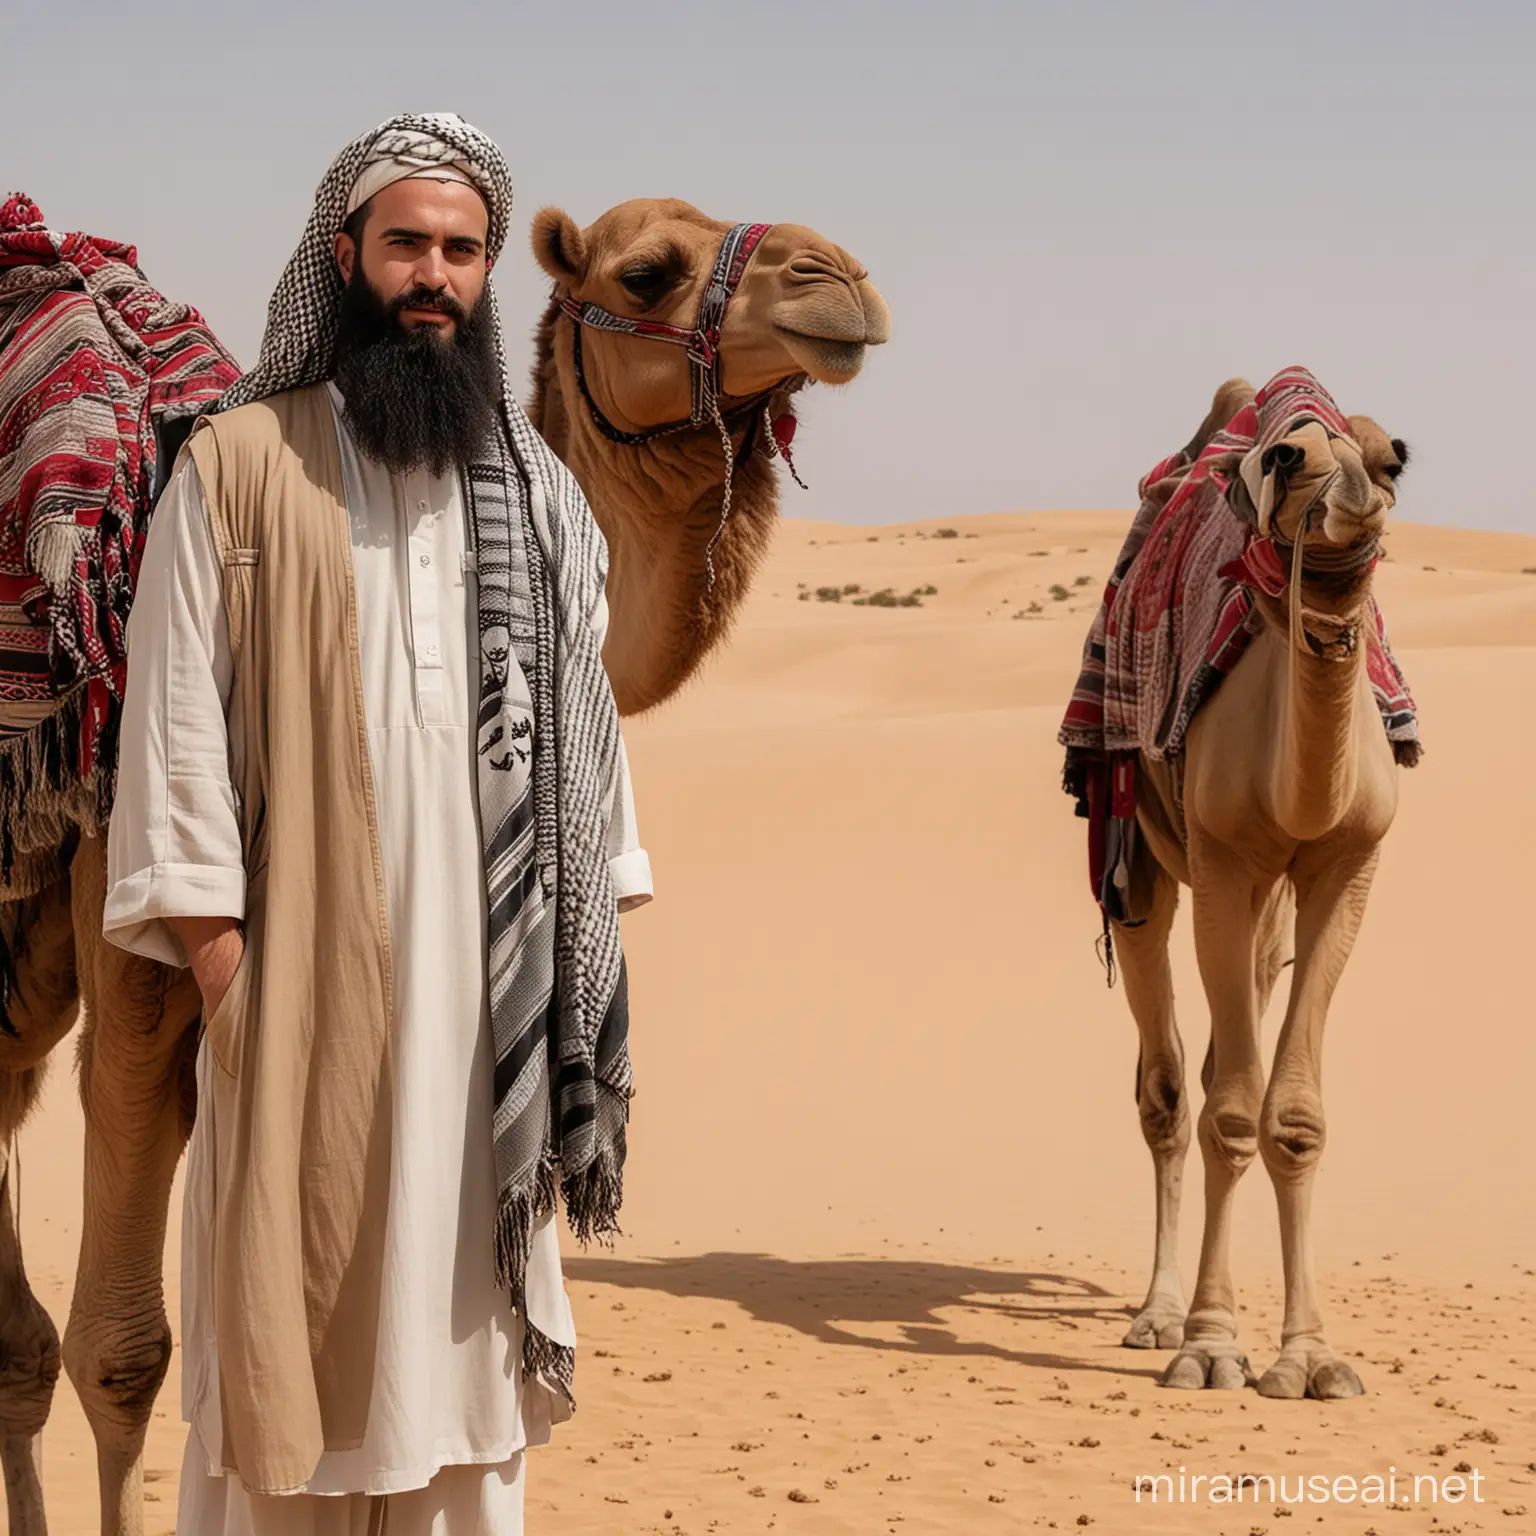 Bearded Man in Thobe and Keffiyeh with Camel in Desert